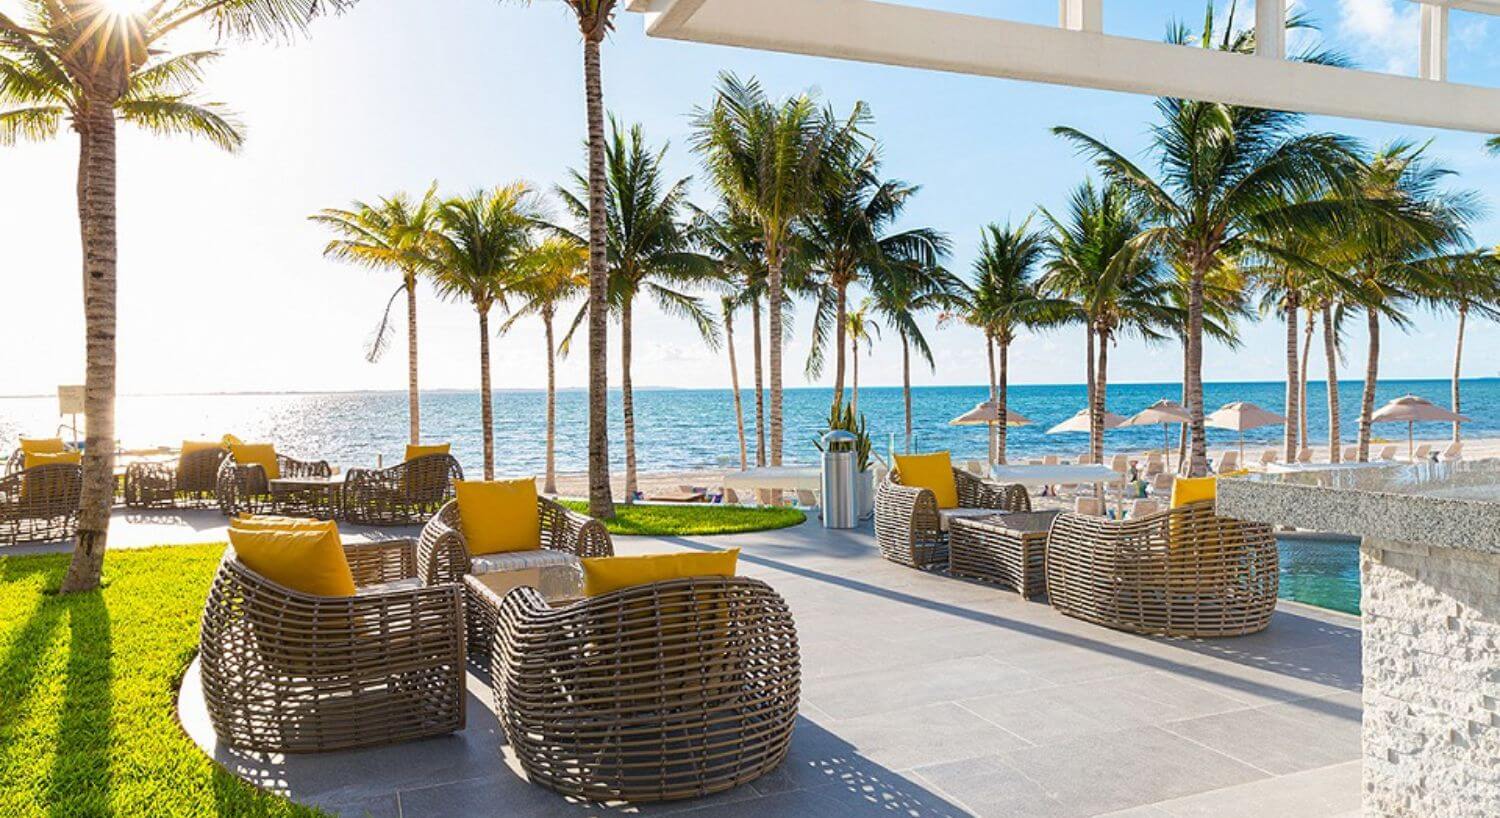 GB-Cancun-Resort-4-1500x818